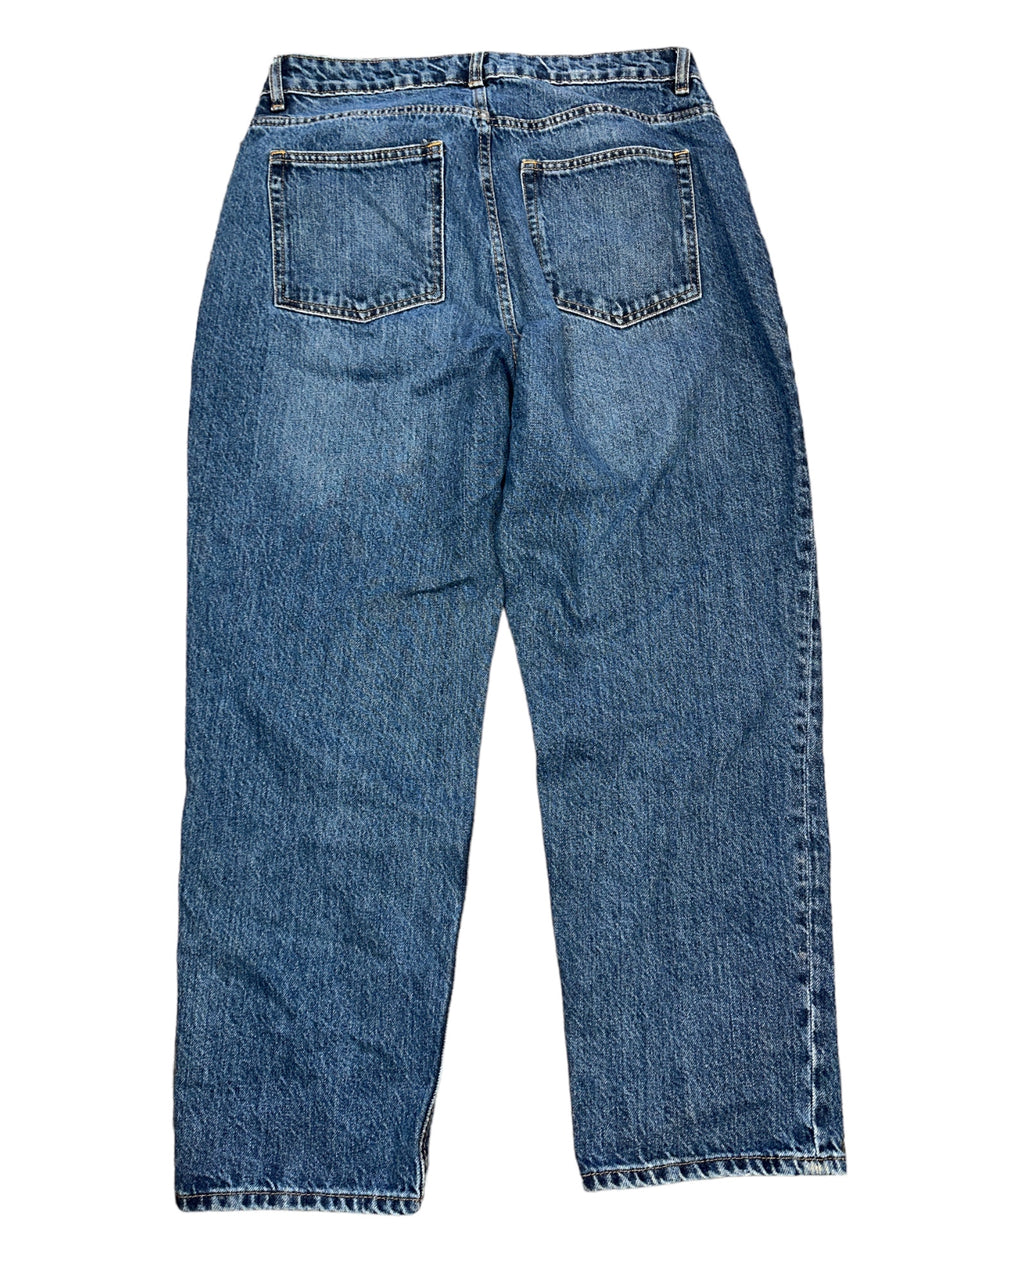 H&M Mom Jeans, 8